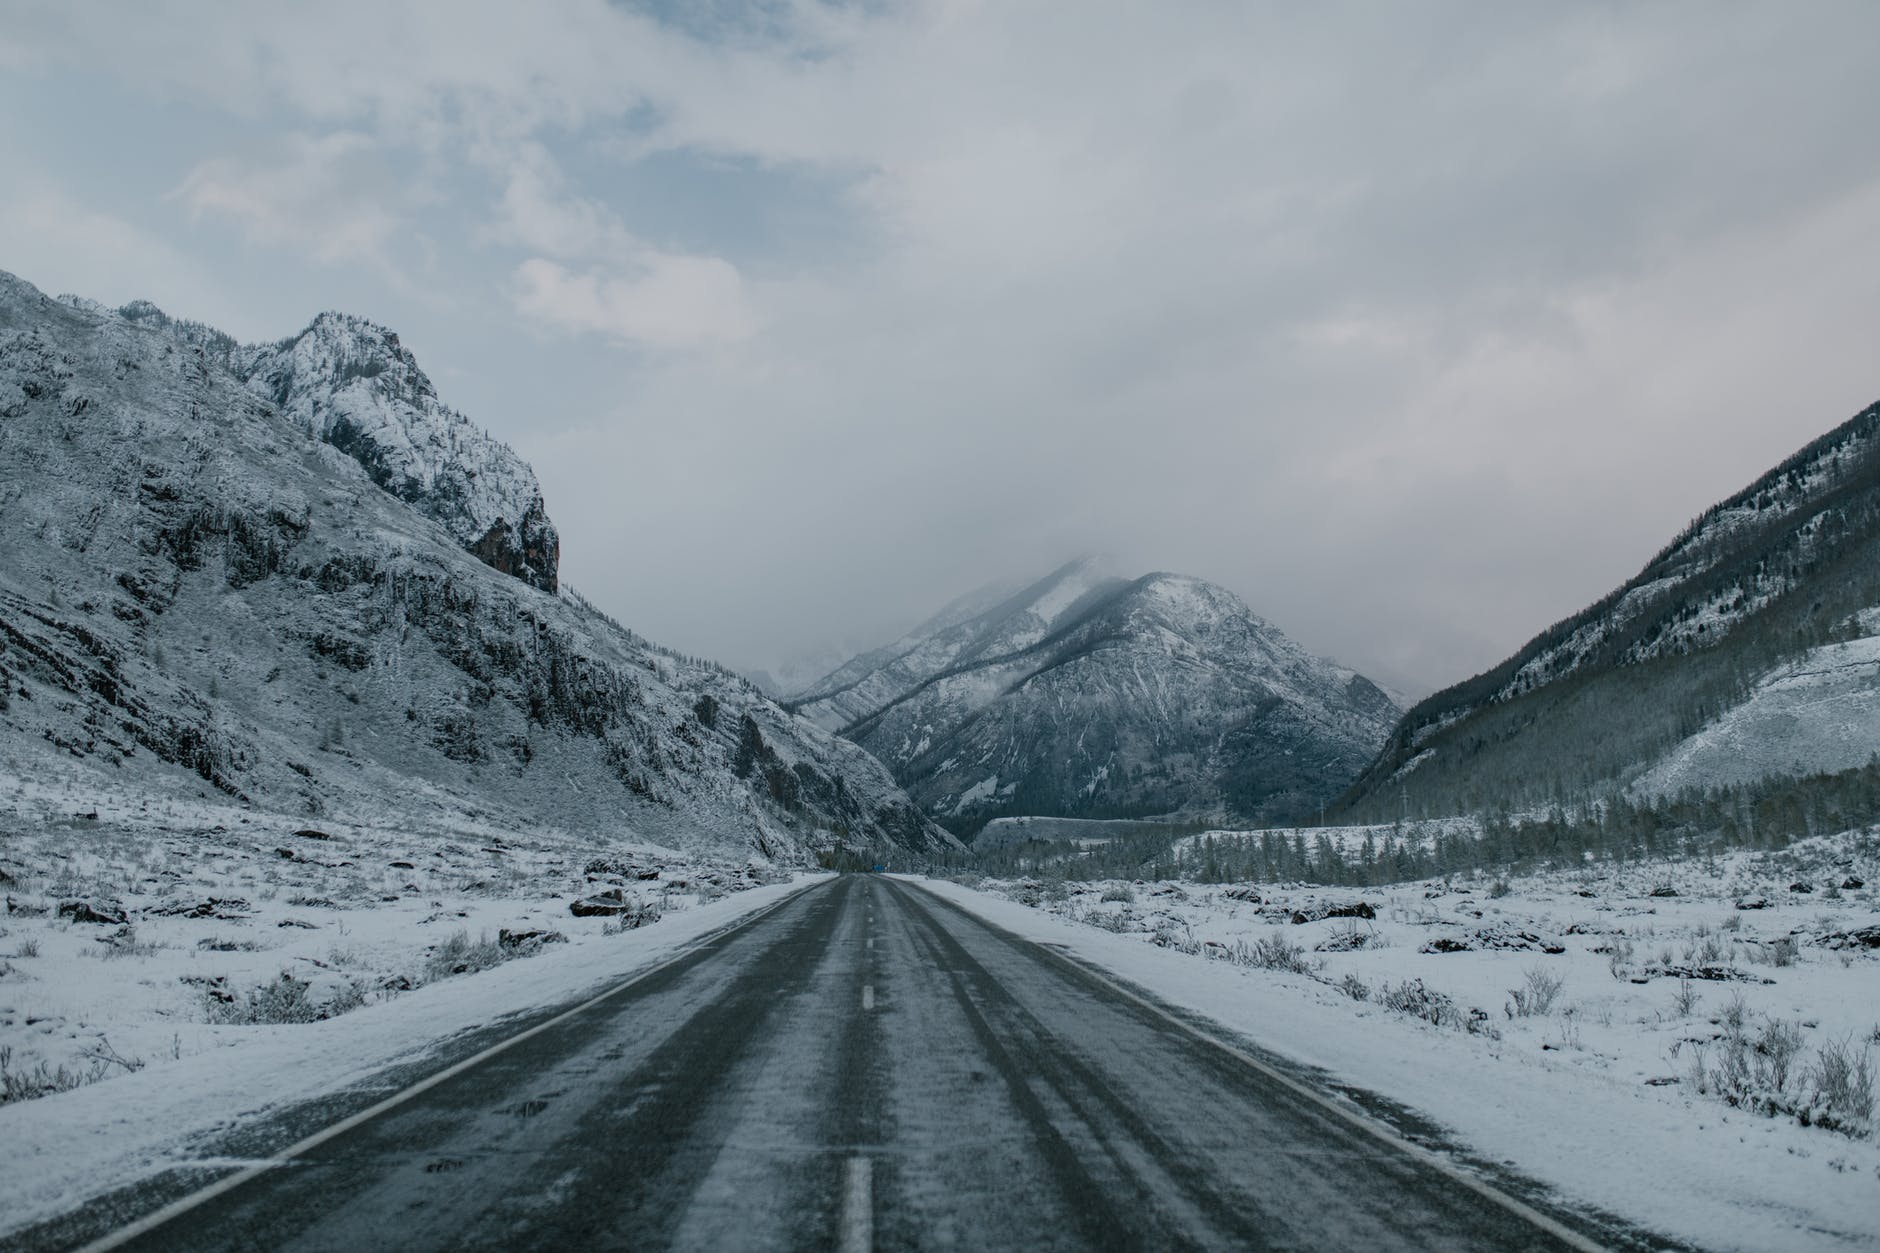 asphalt road through snowy mountainous terrain